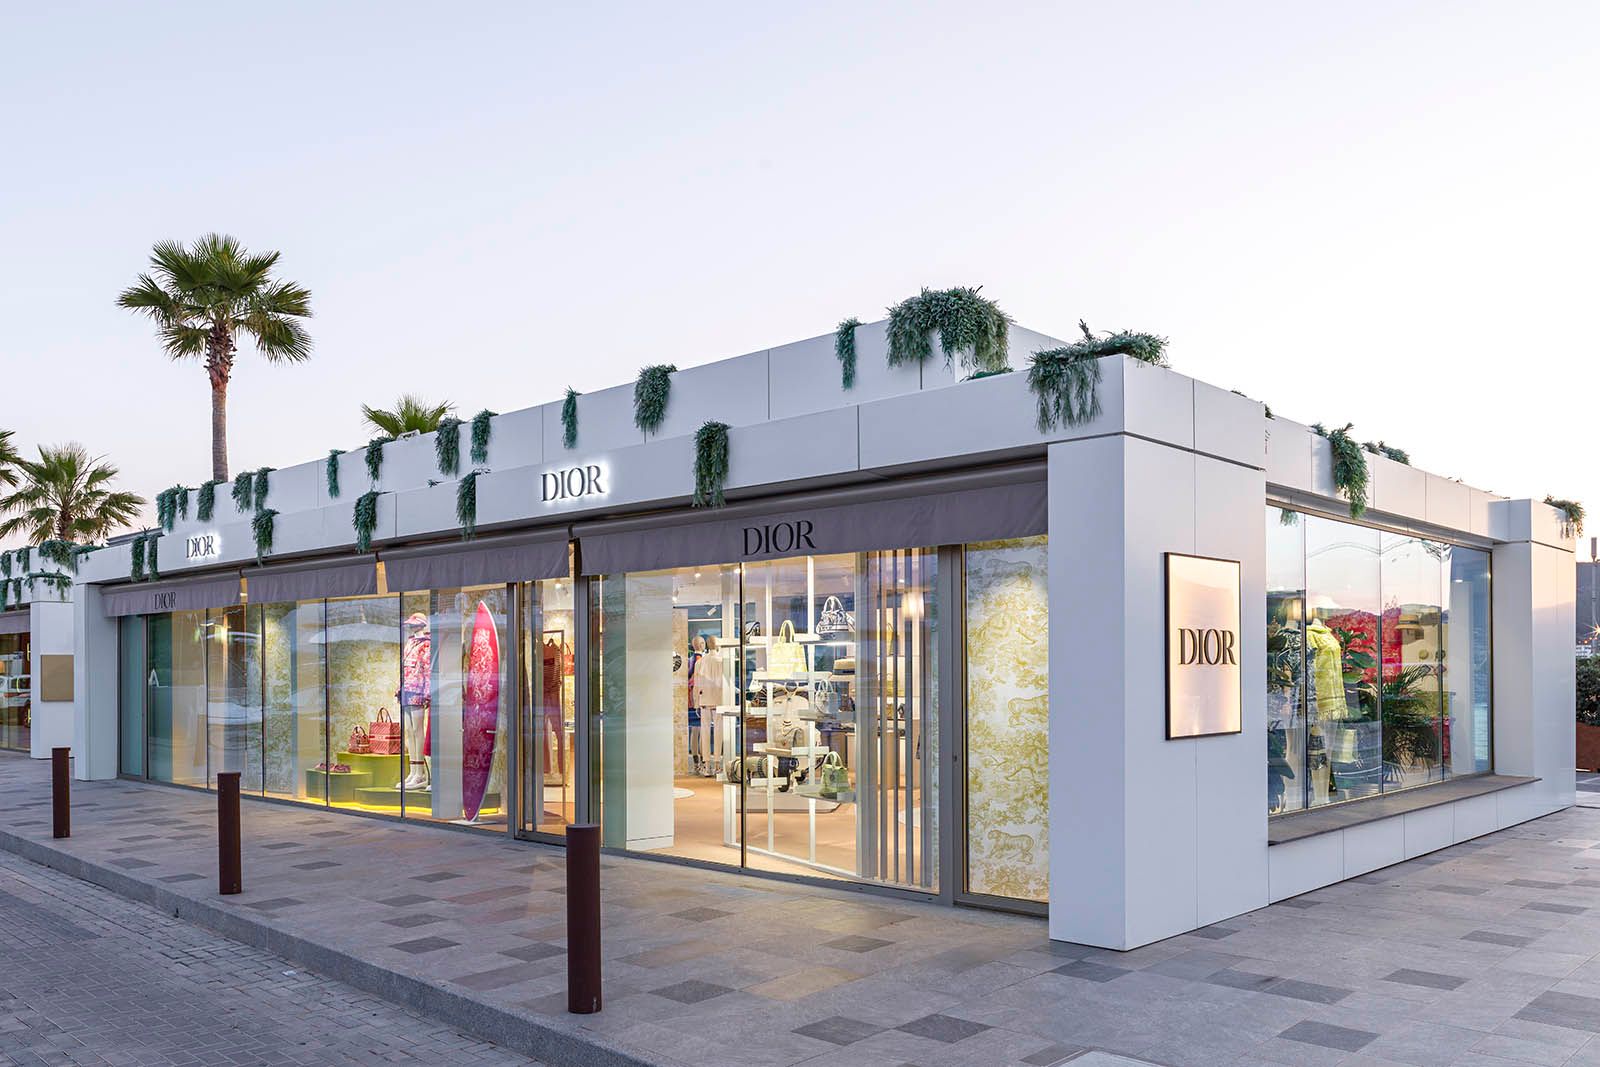 Louis Vuitton opens a pop-up store en Marina Ibiza